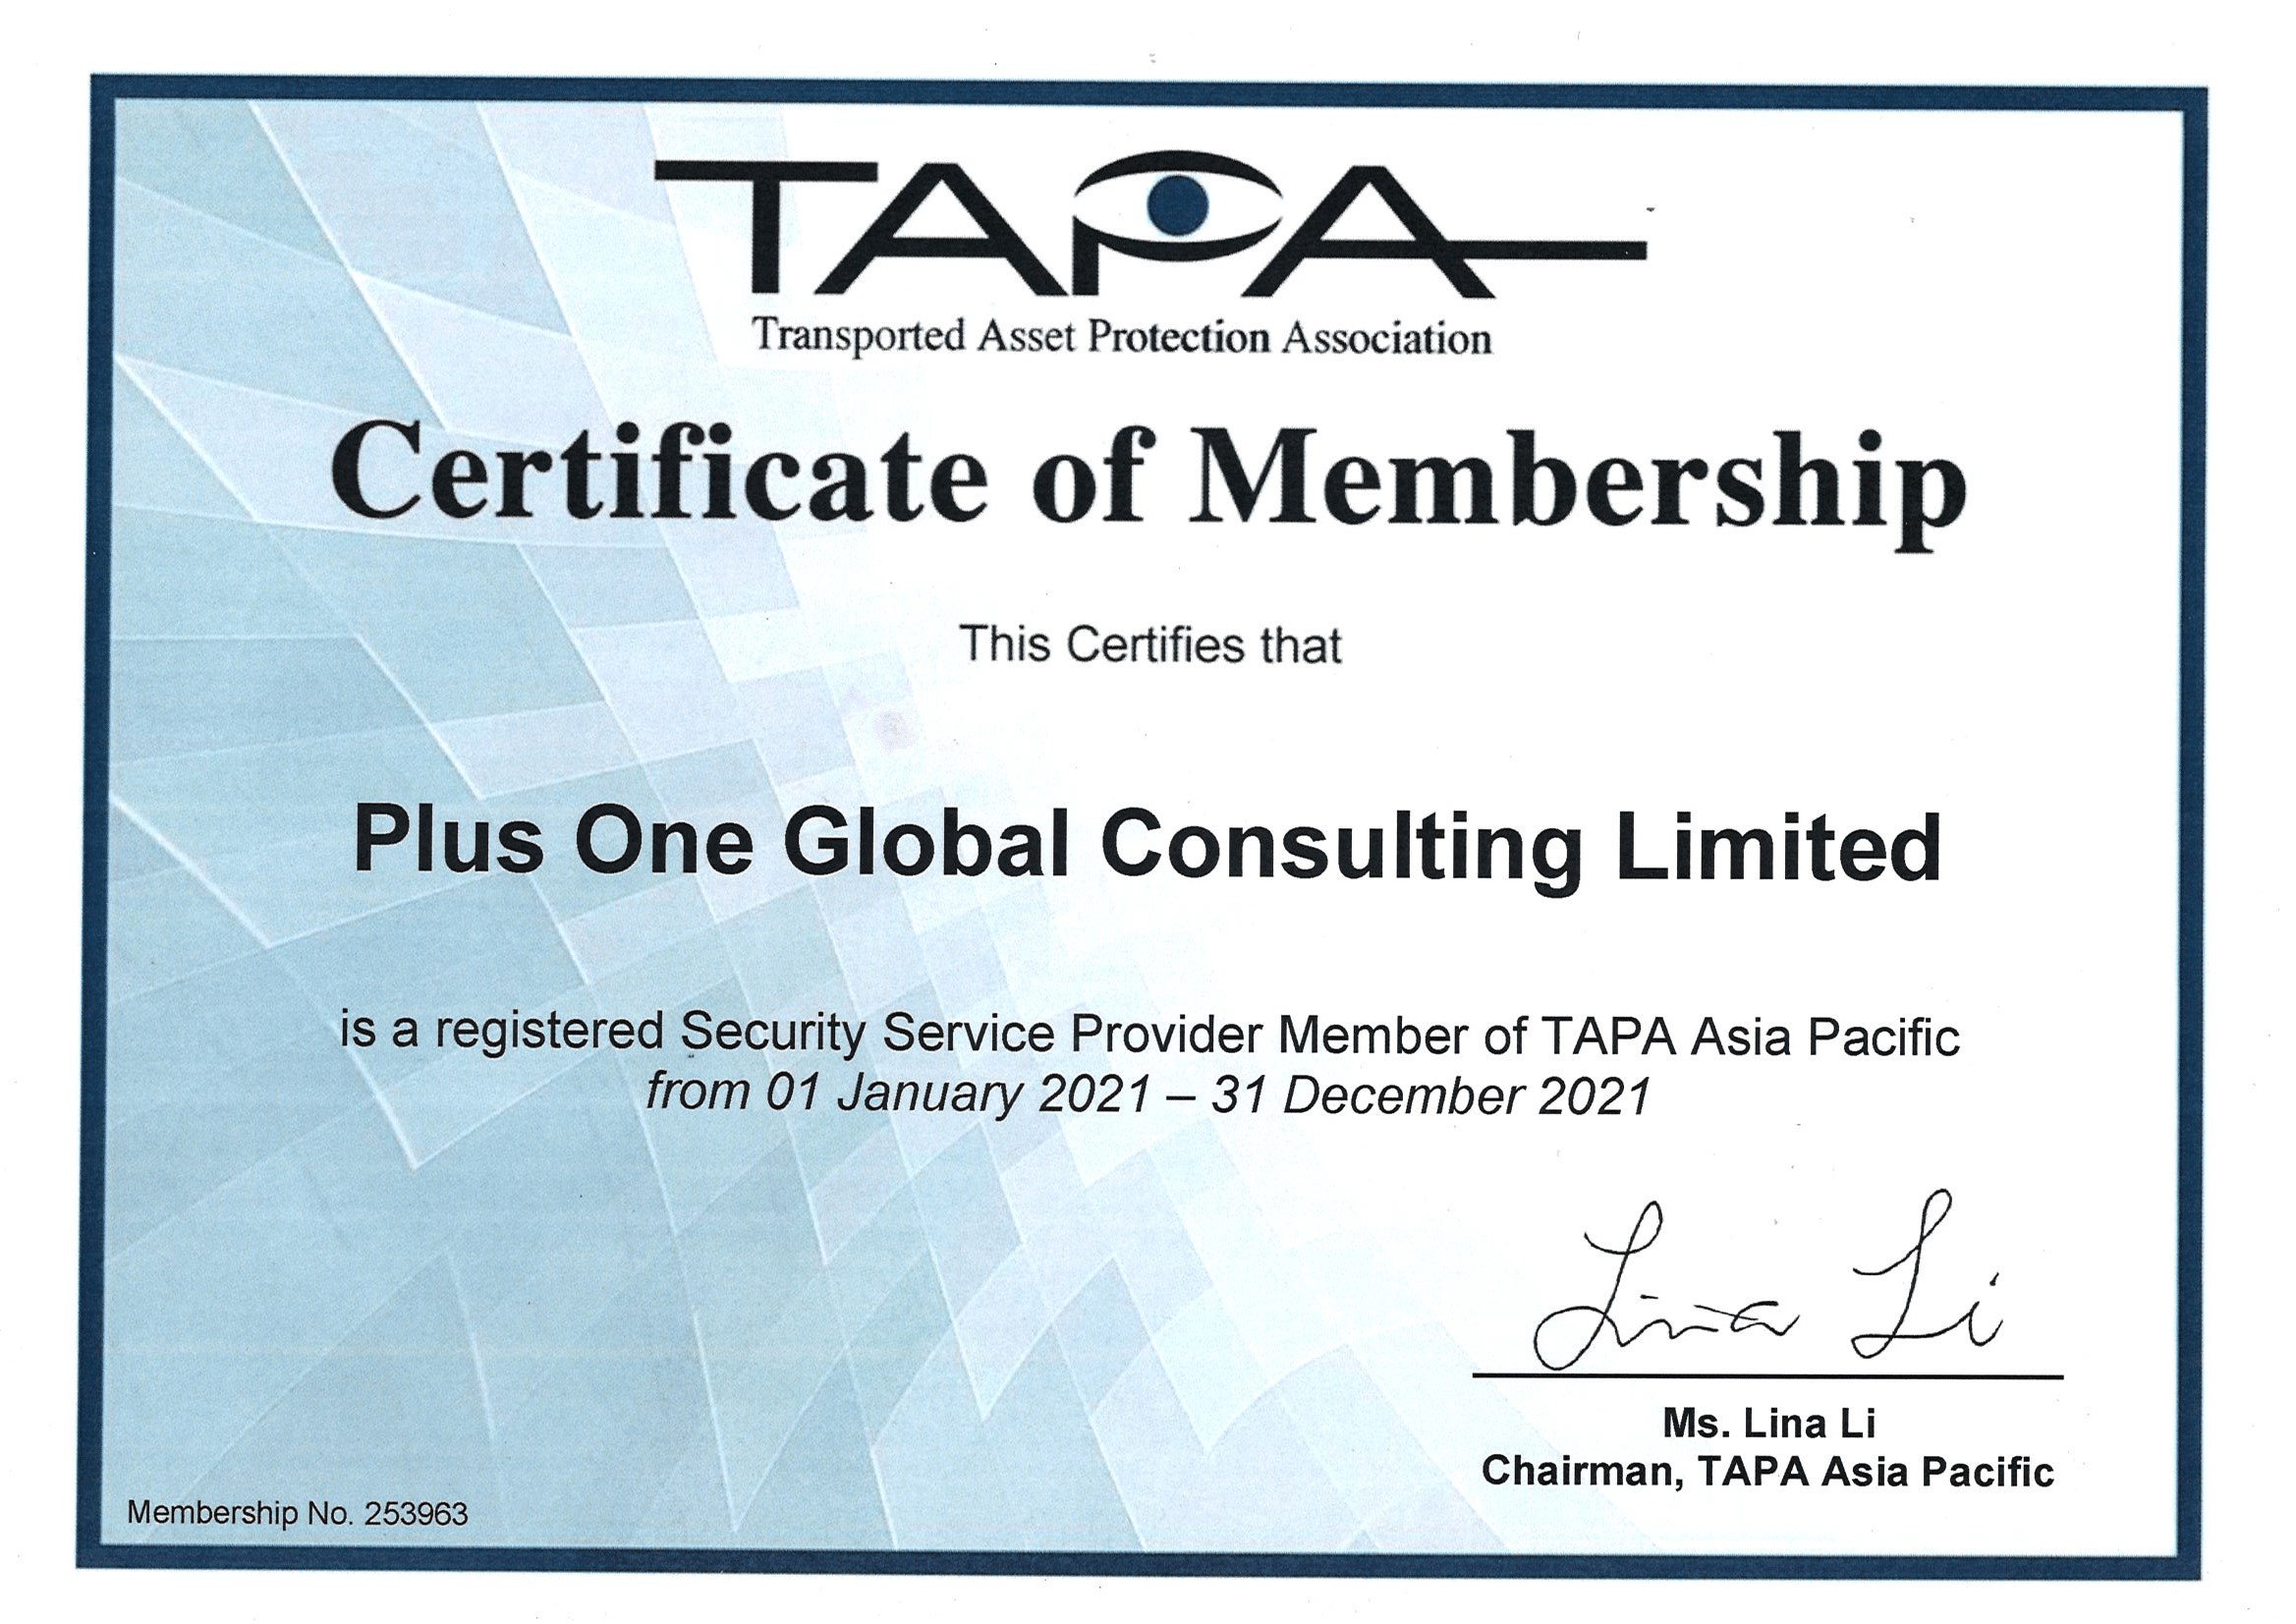 TAPA 2021 membership-1.jpg (600 KB)